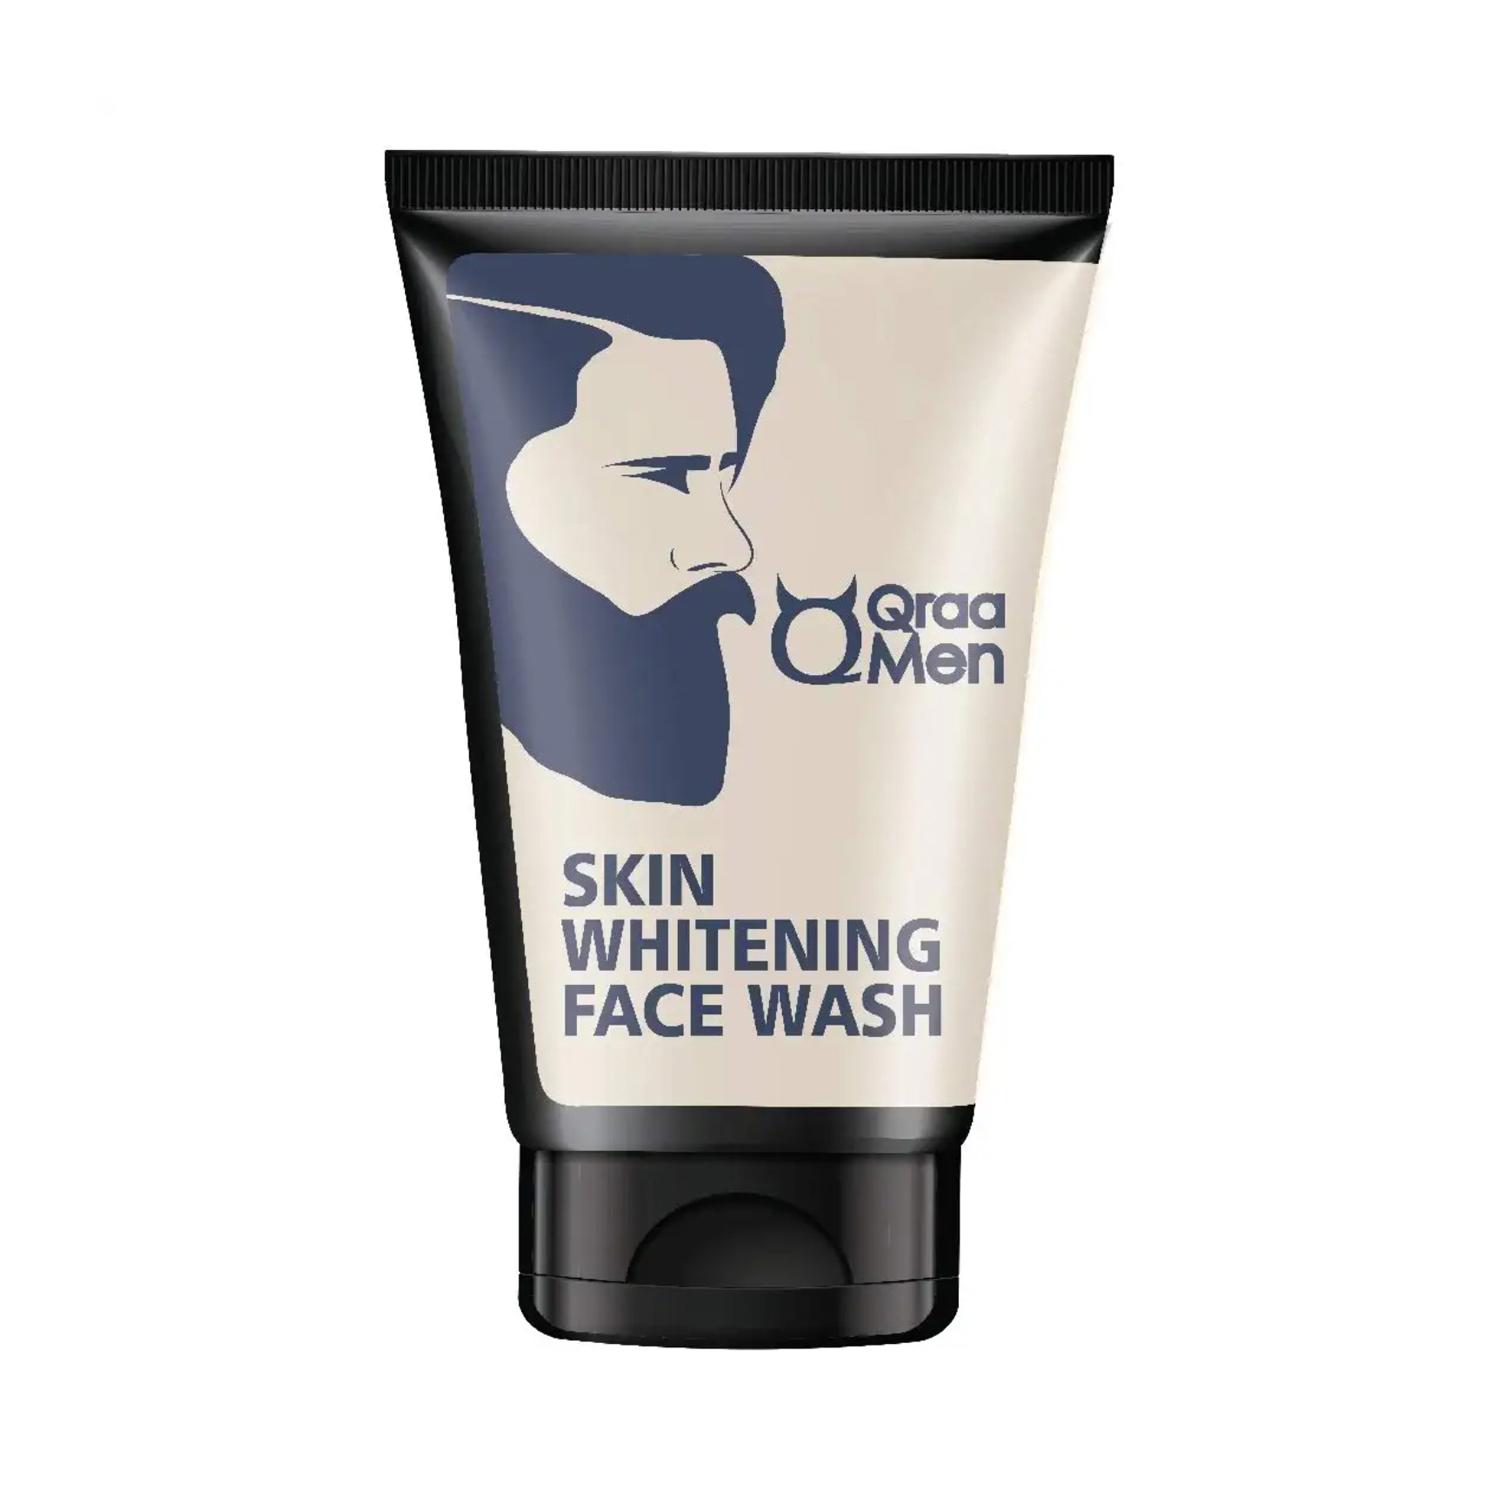 Qraamen | Qraamen Skin Whitening Face Wash for Men with Yogurt and Oatmeal (100 g)